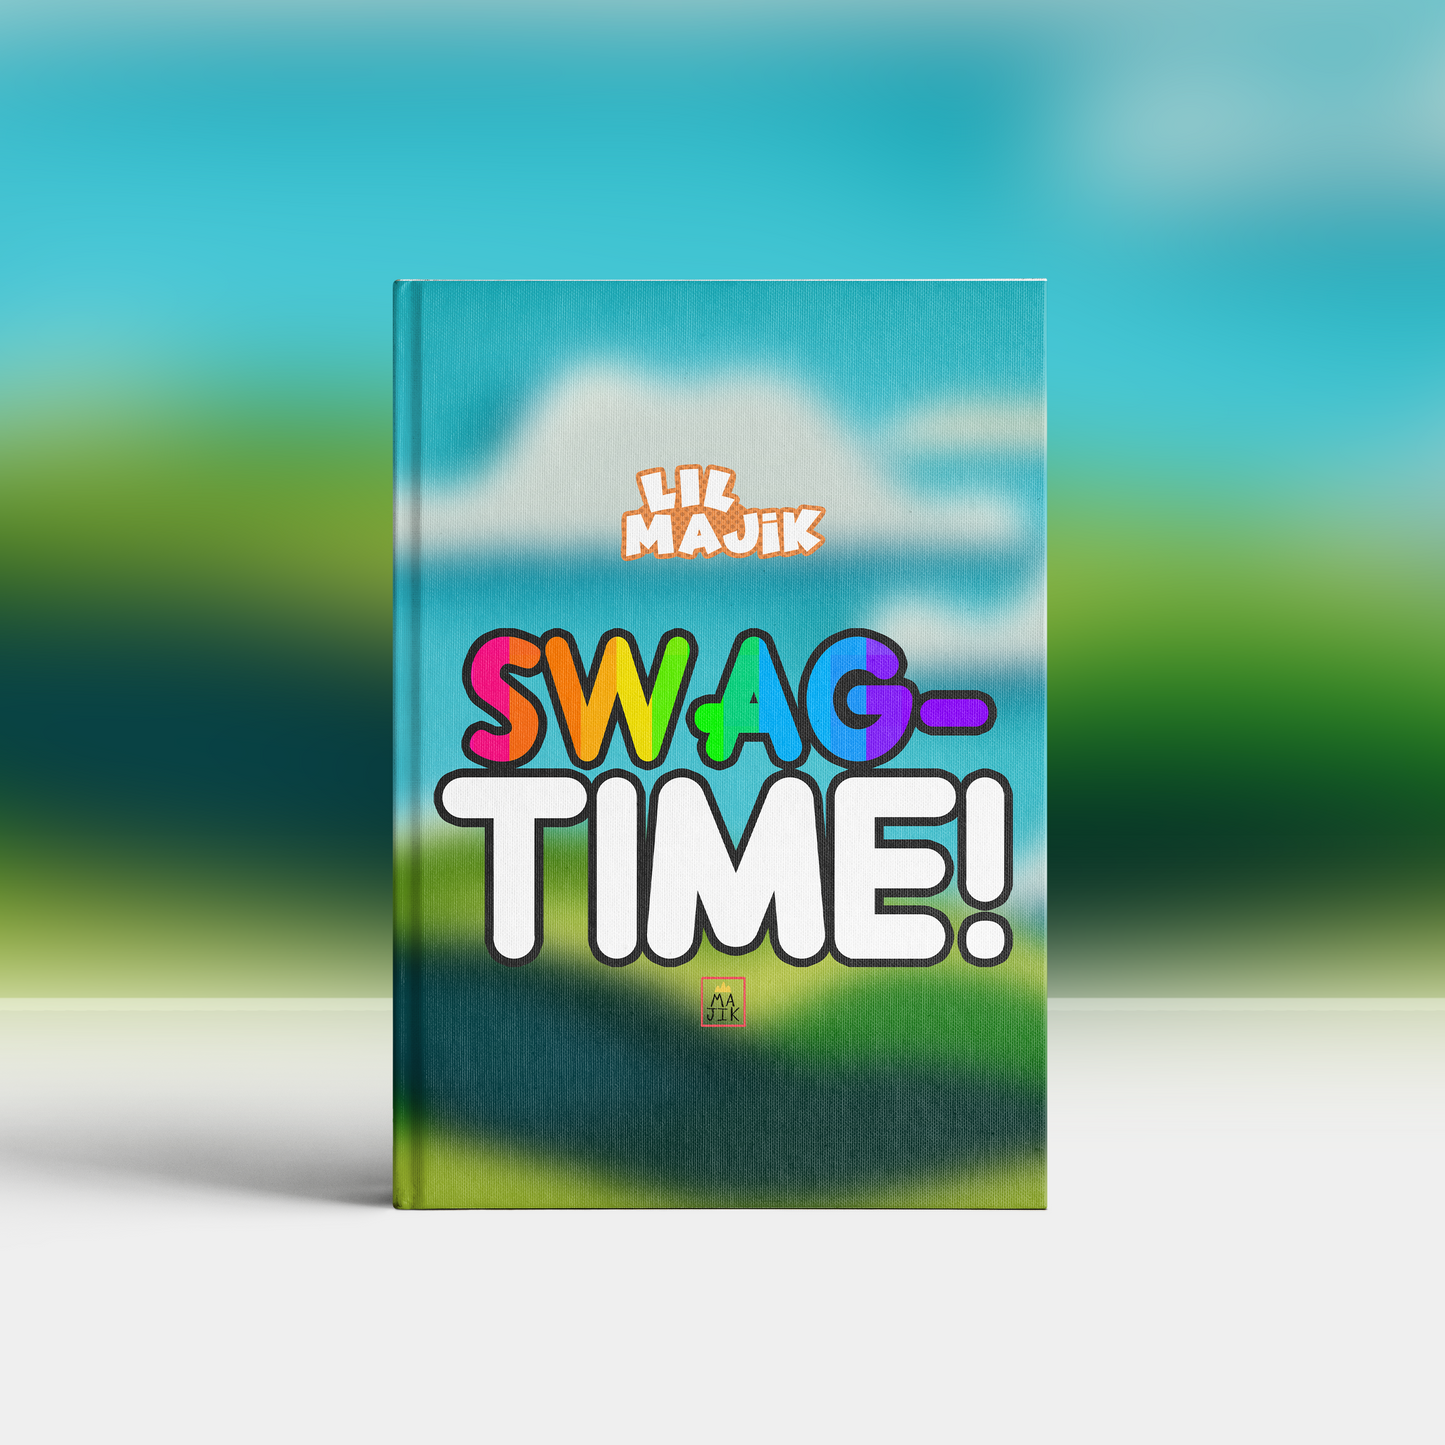 Swag-Time! "Origins"